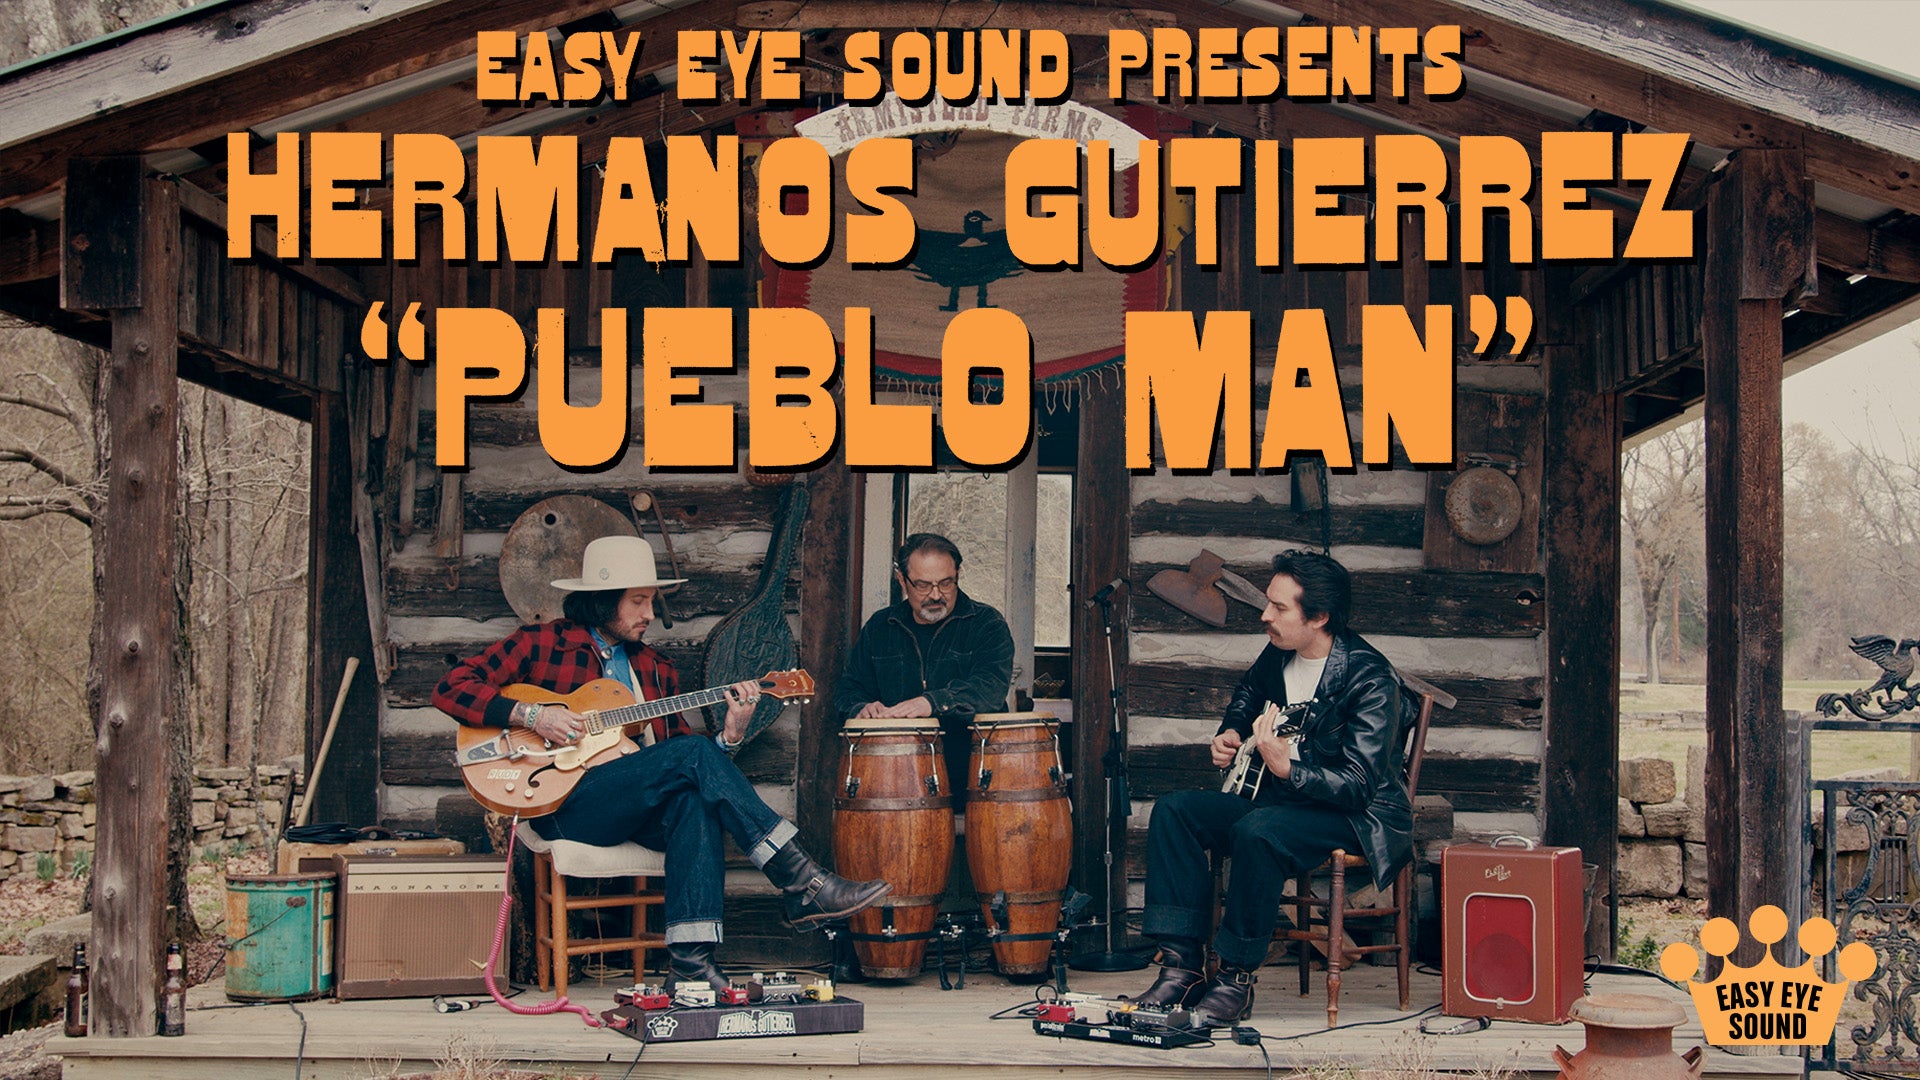 WATCH THE NEW HERMANOS GUTIÉRREZ LIVE SESSION FOR “PUEBLO MAN”